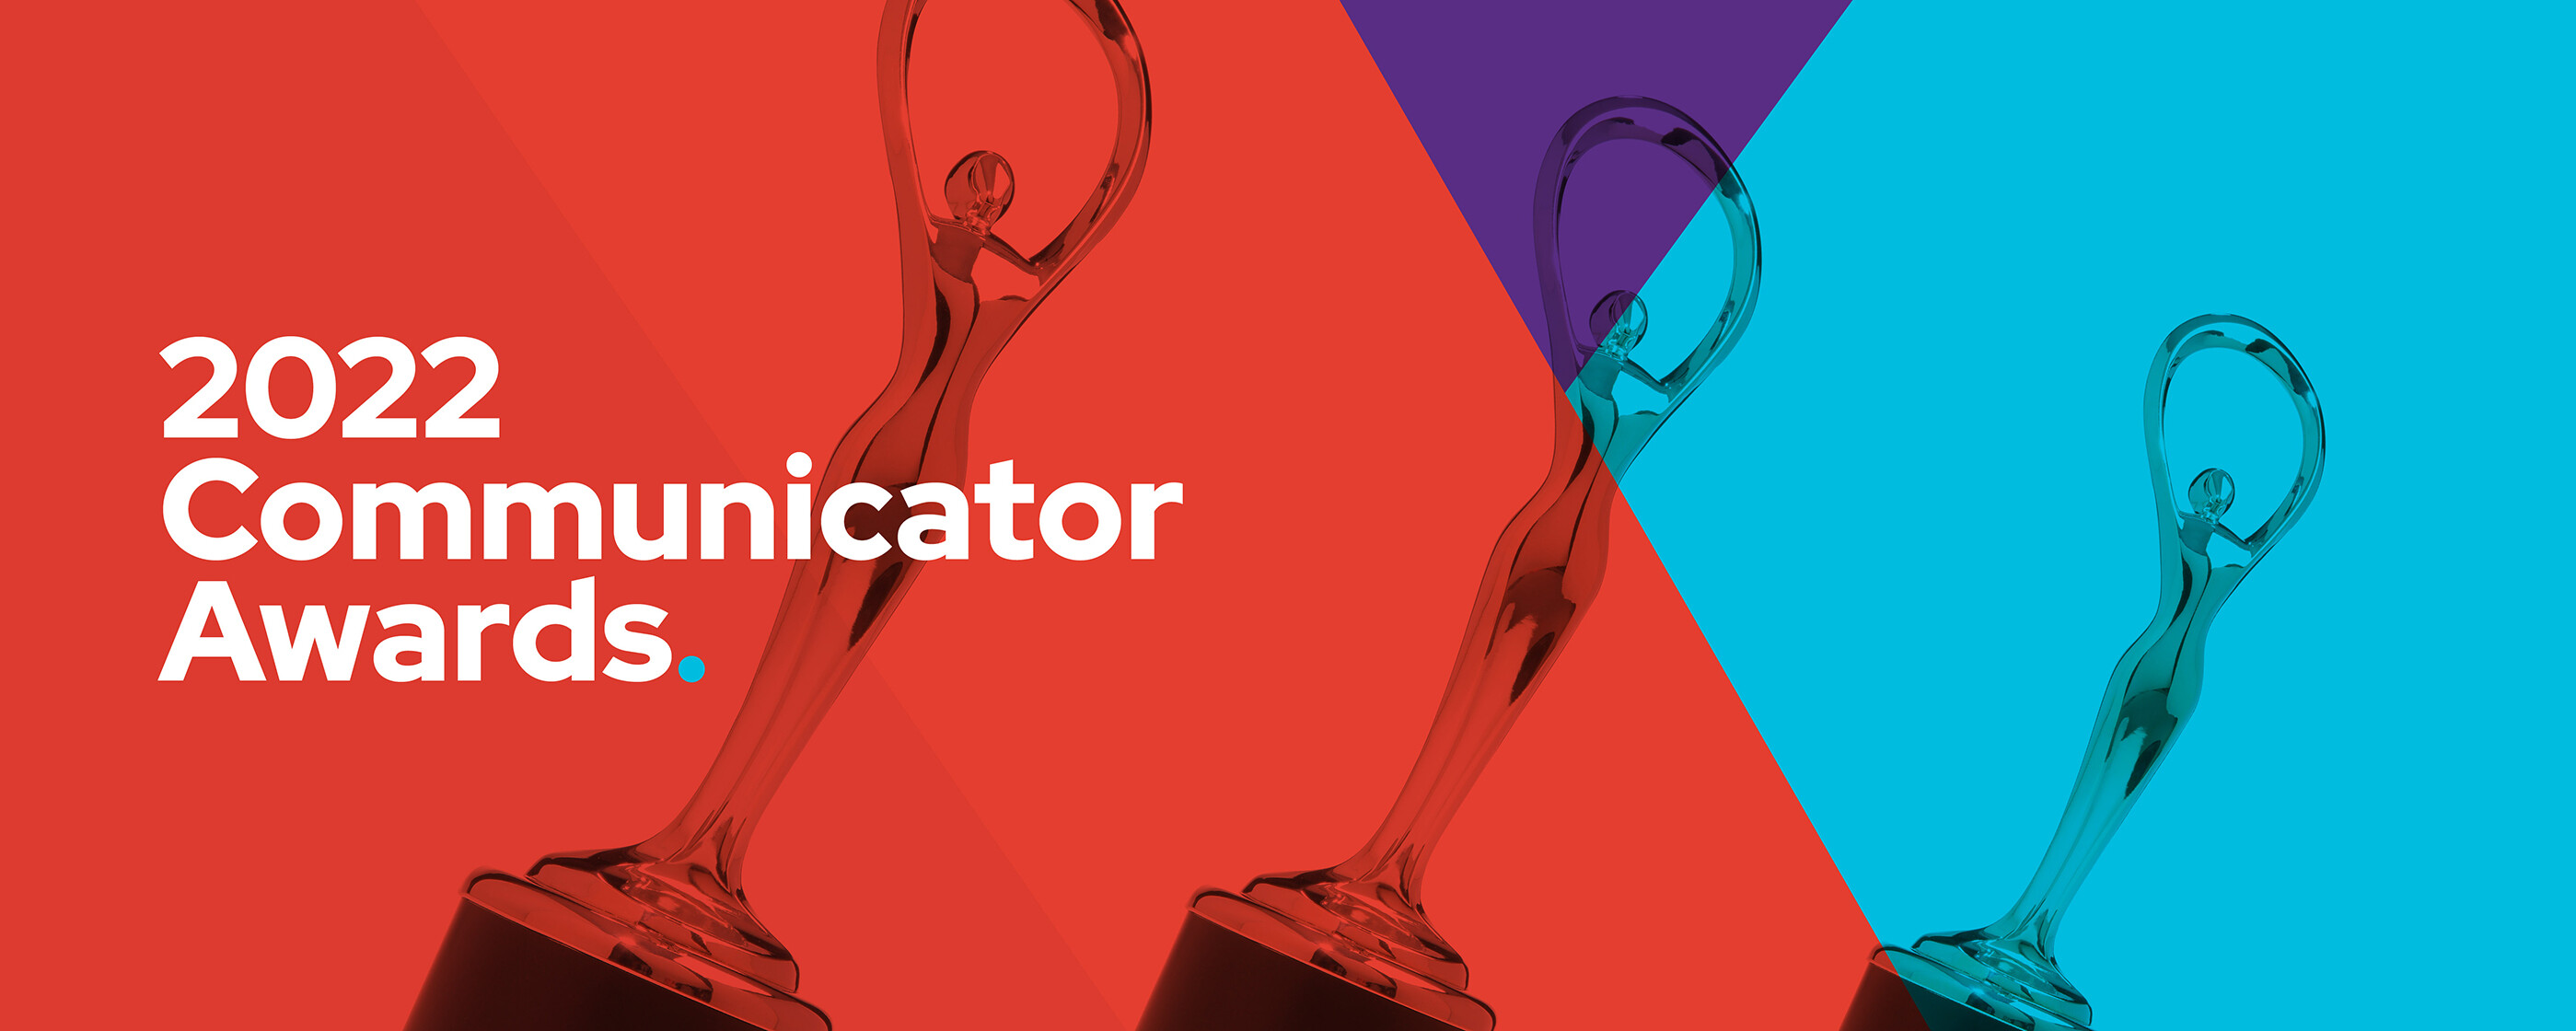 OBI Wins Three Communicator Awards for 2022 OBI Creative